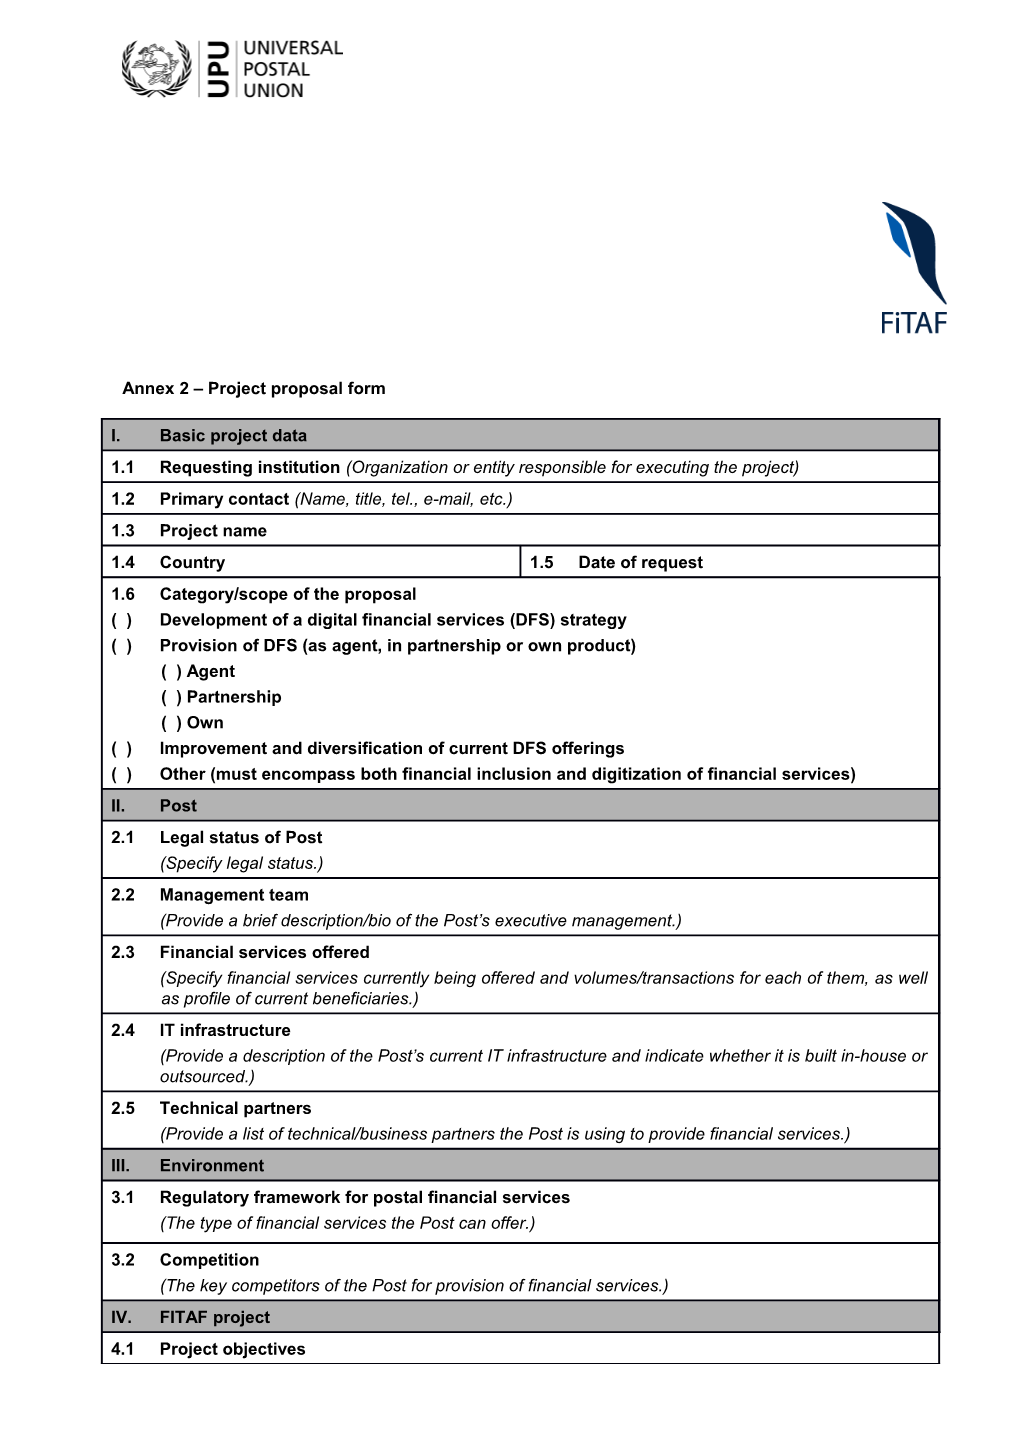 Annex 2 Project Proposal Form